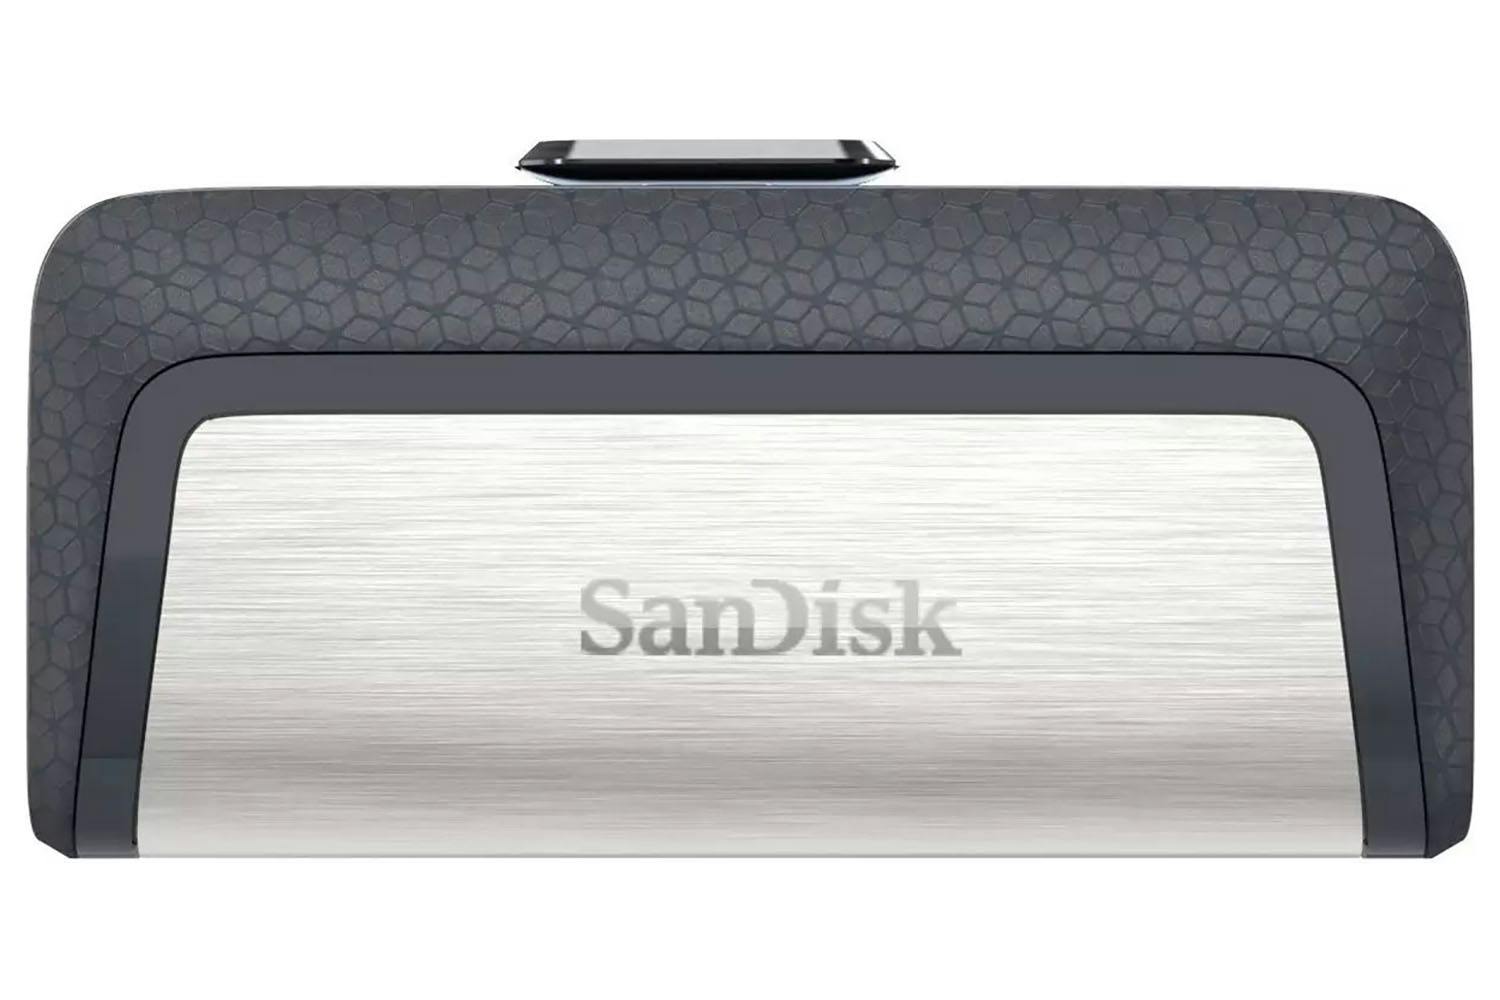 SanDisk Ultra Dual Drive Type C USB Flash Drive | 64GB